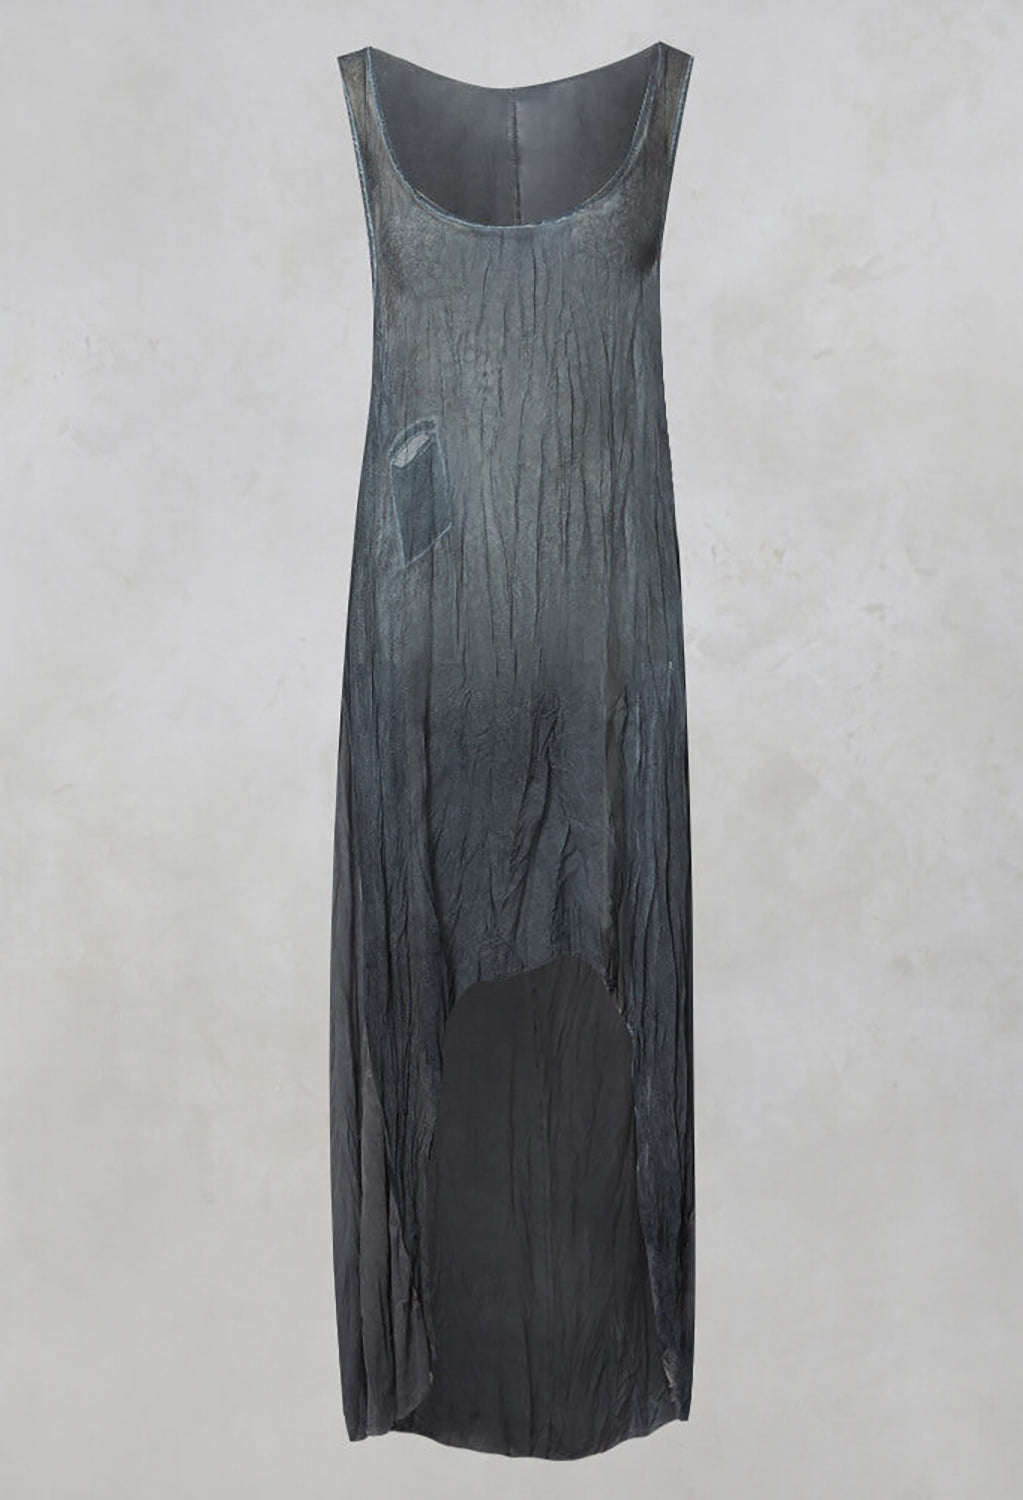 Sleeveless Sheer Dress with Drop Hem in indigo